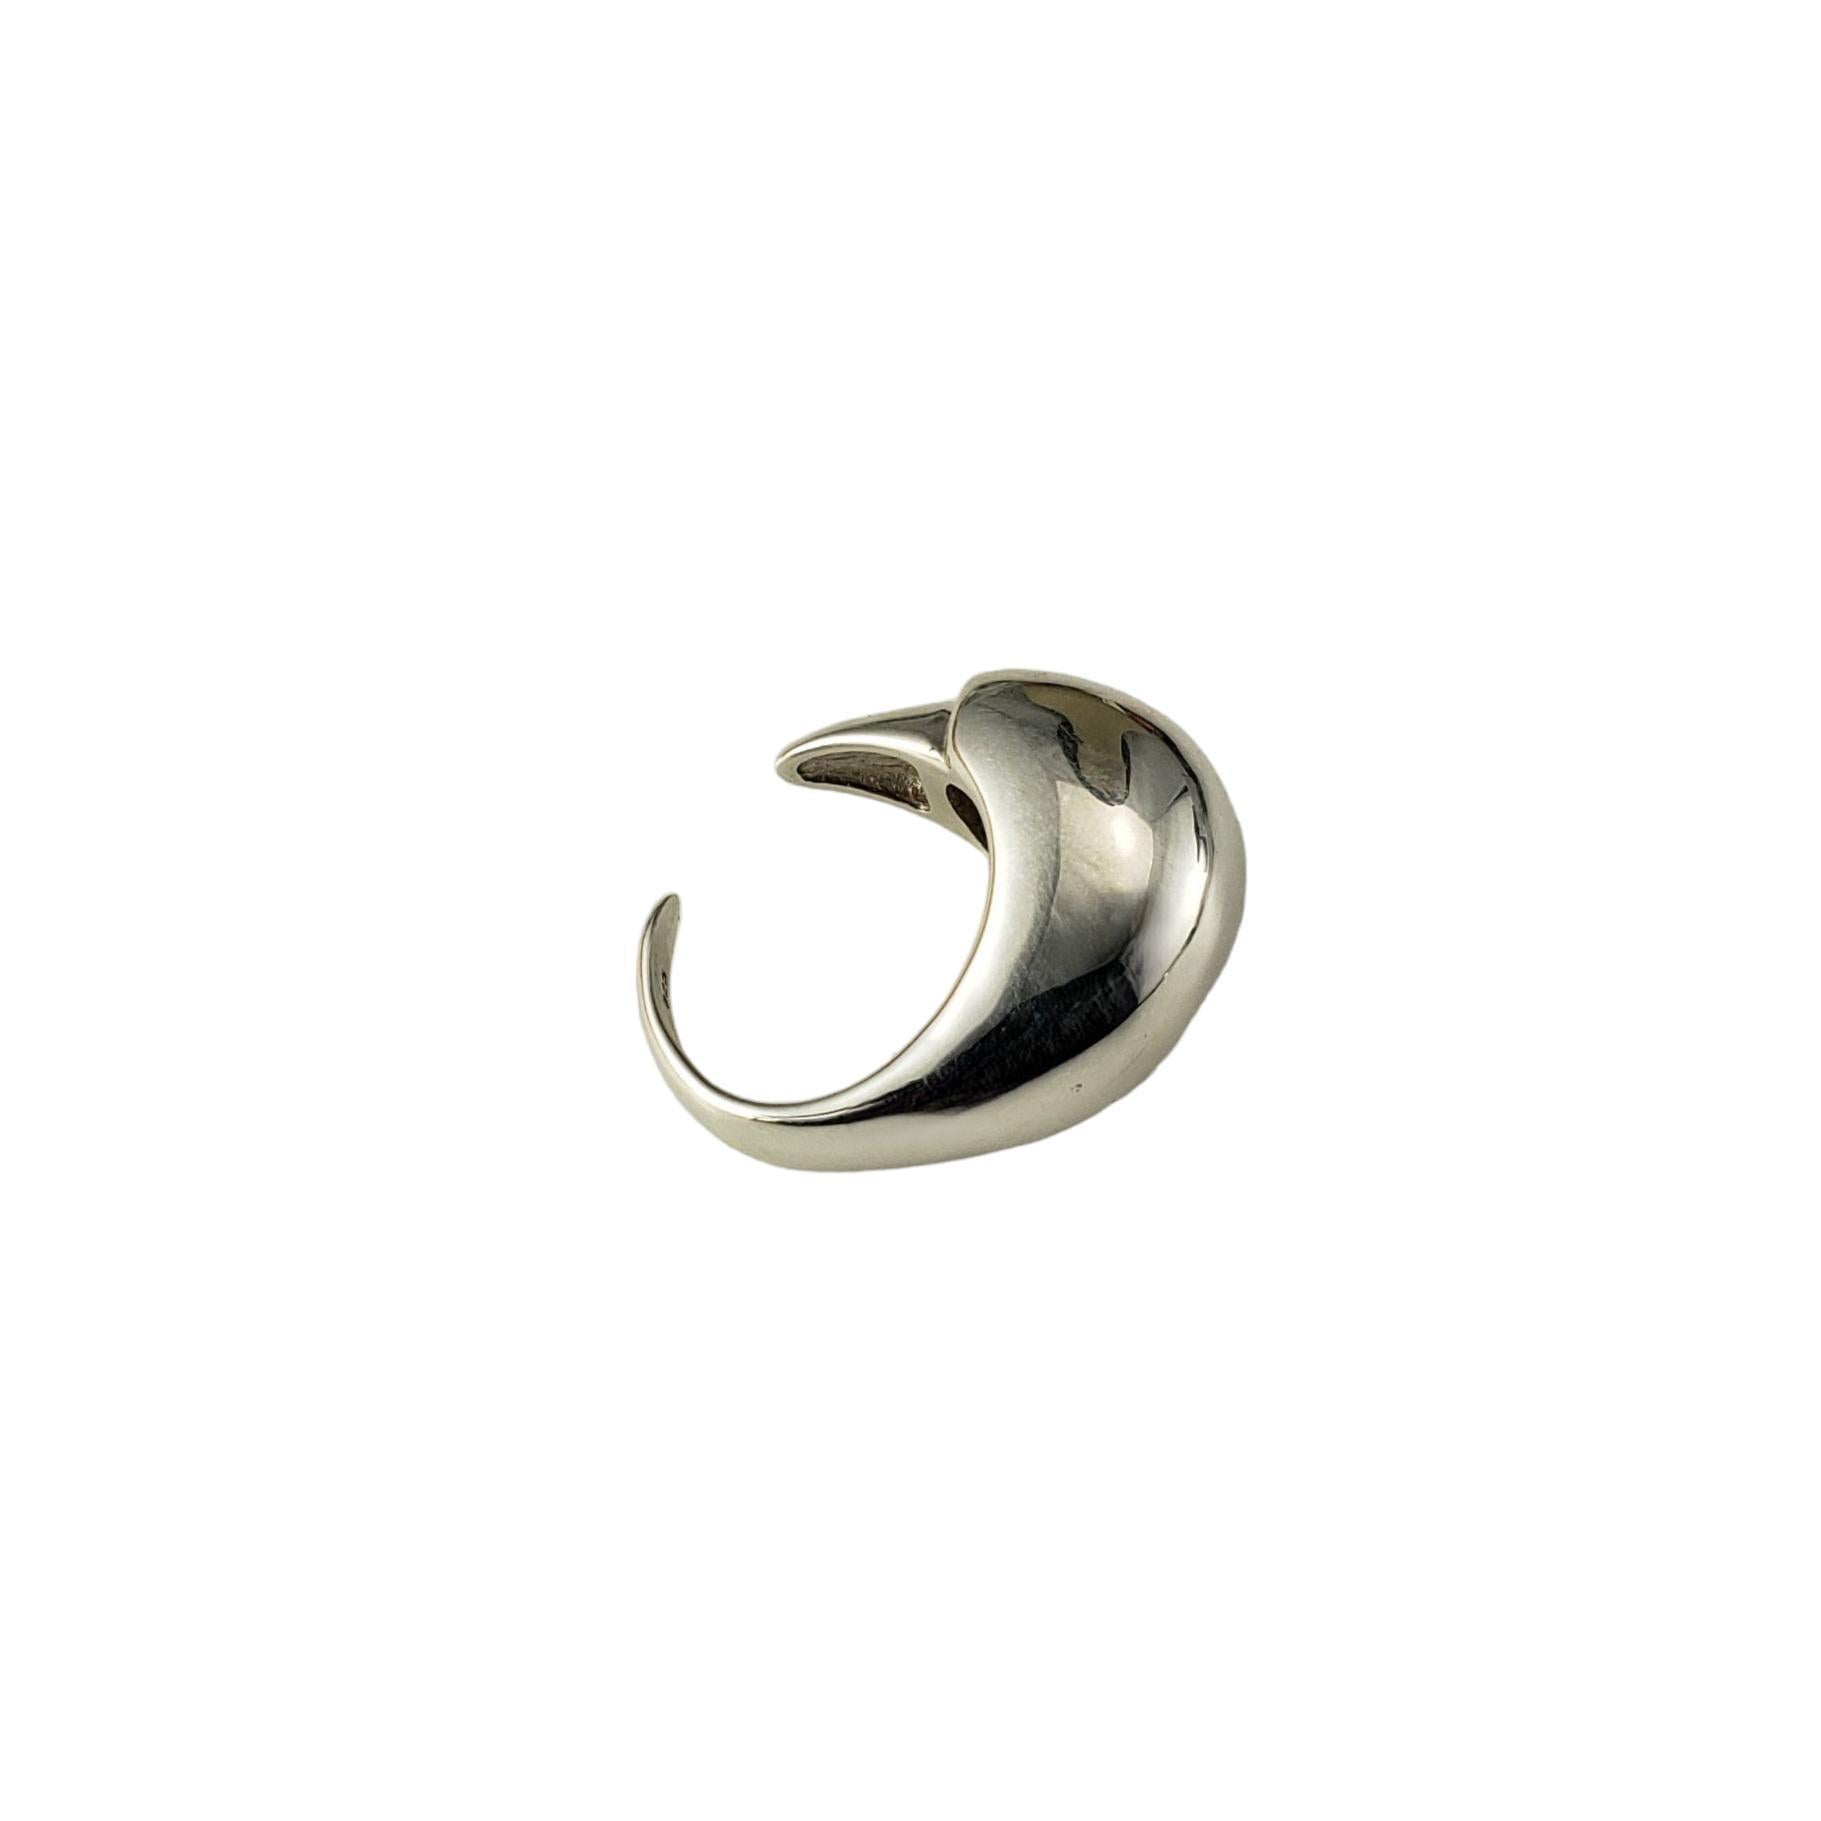 Tiffany & Co. Elsa Peretti Sterling Silver Bird Ring Size 5

This elegant bird ring by Elsa Peretti for Tiffany & Co. is crafted in beautifully detailed sterling silver. 

Width: 12 mm.  Height: 10 mm. 

Ring Size: 5

Hallmark: TIFFANY & CO. PERETTI